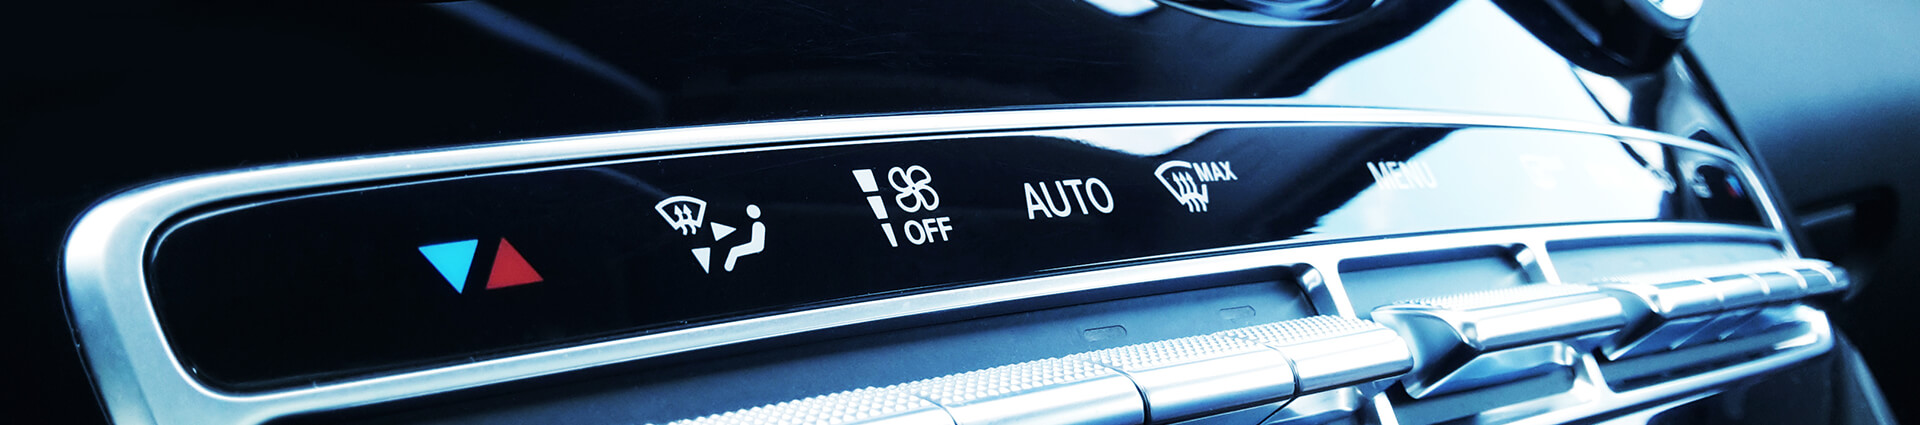 interior of car air condition